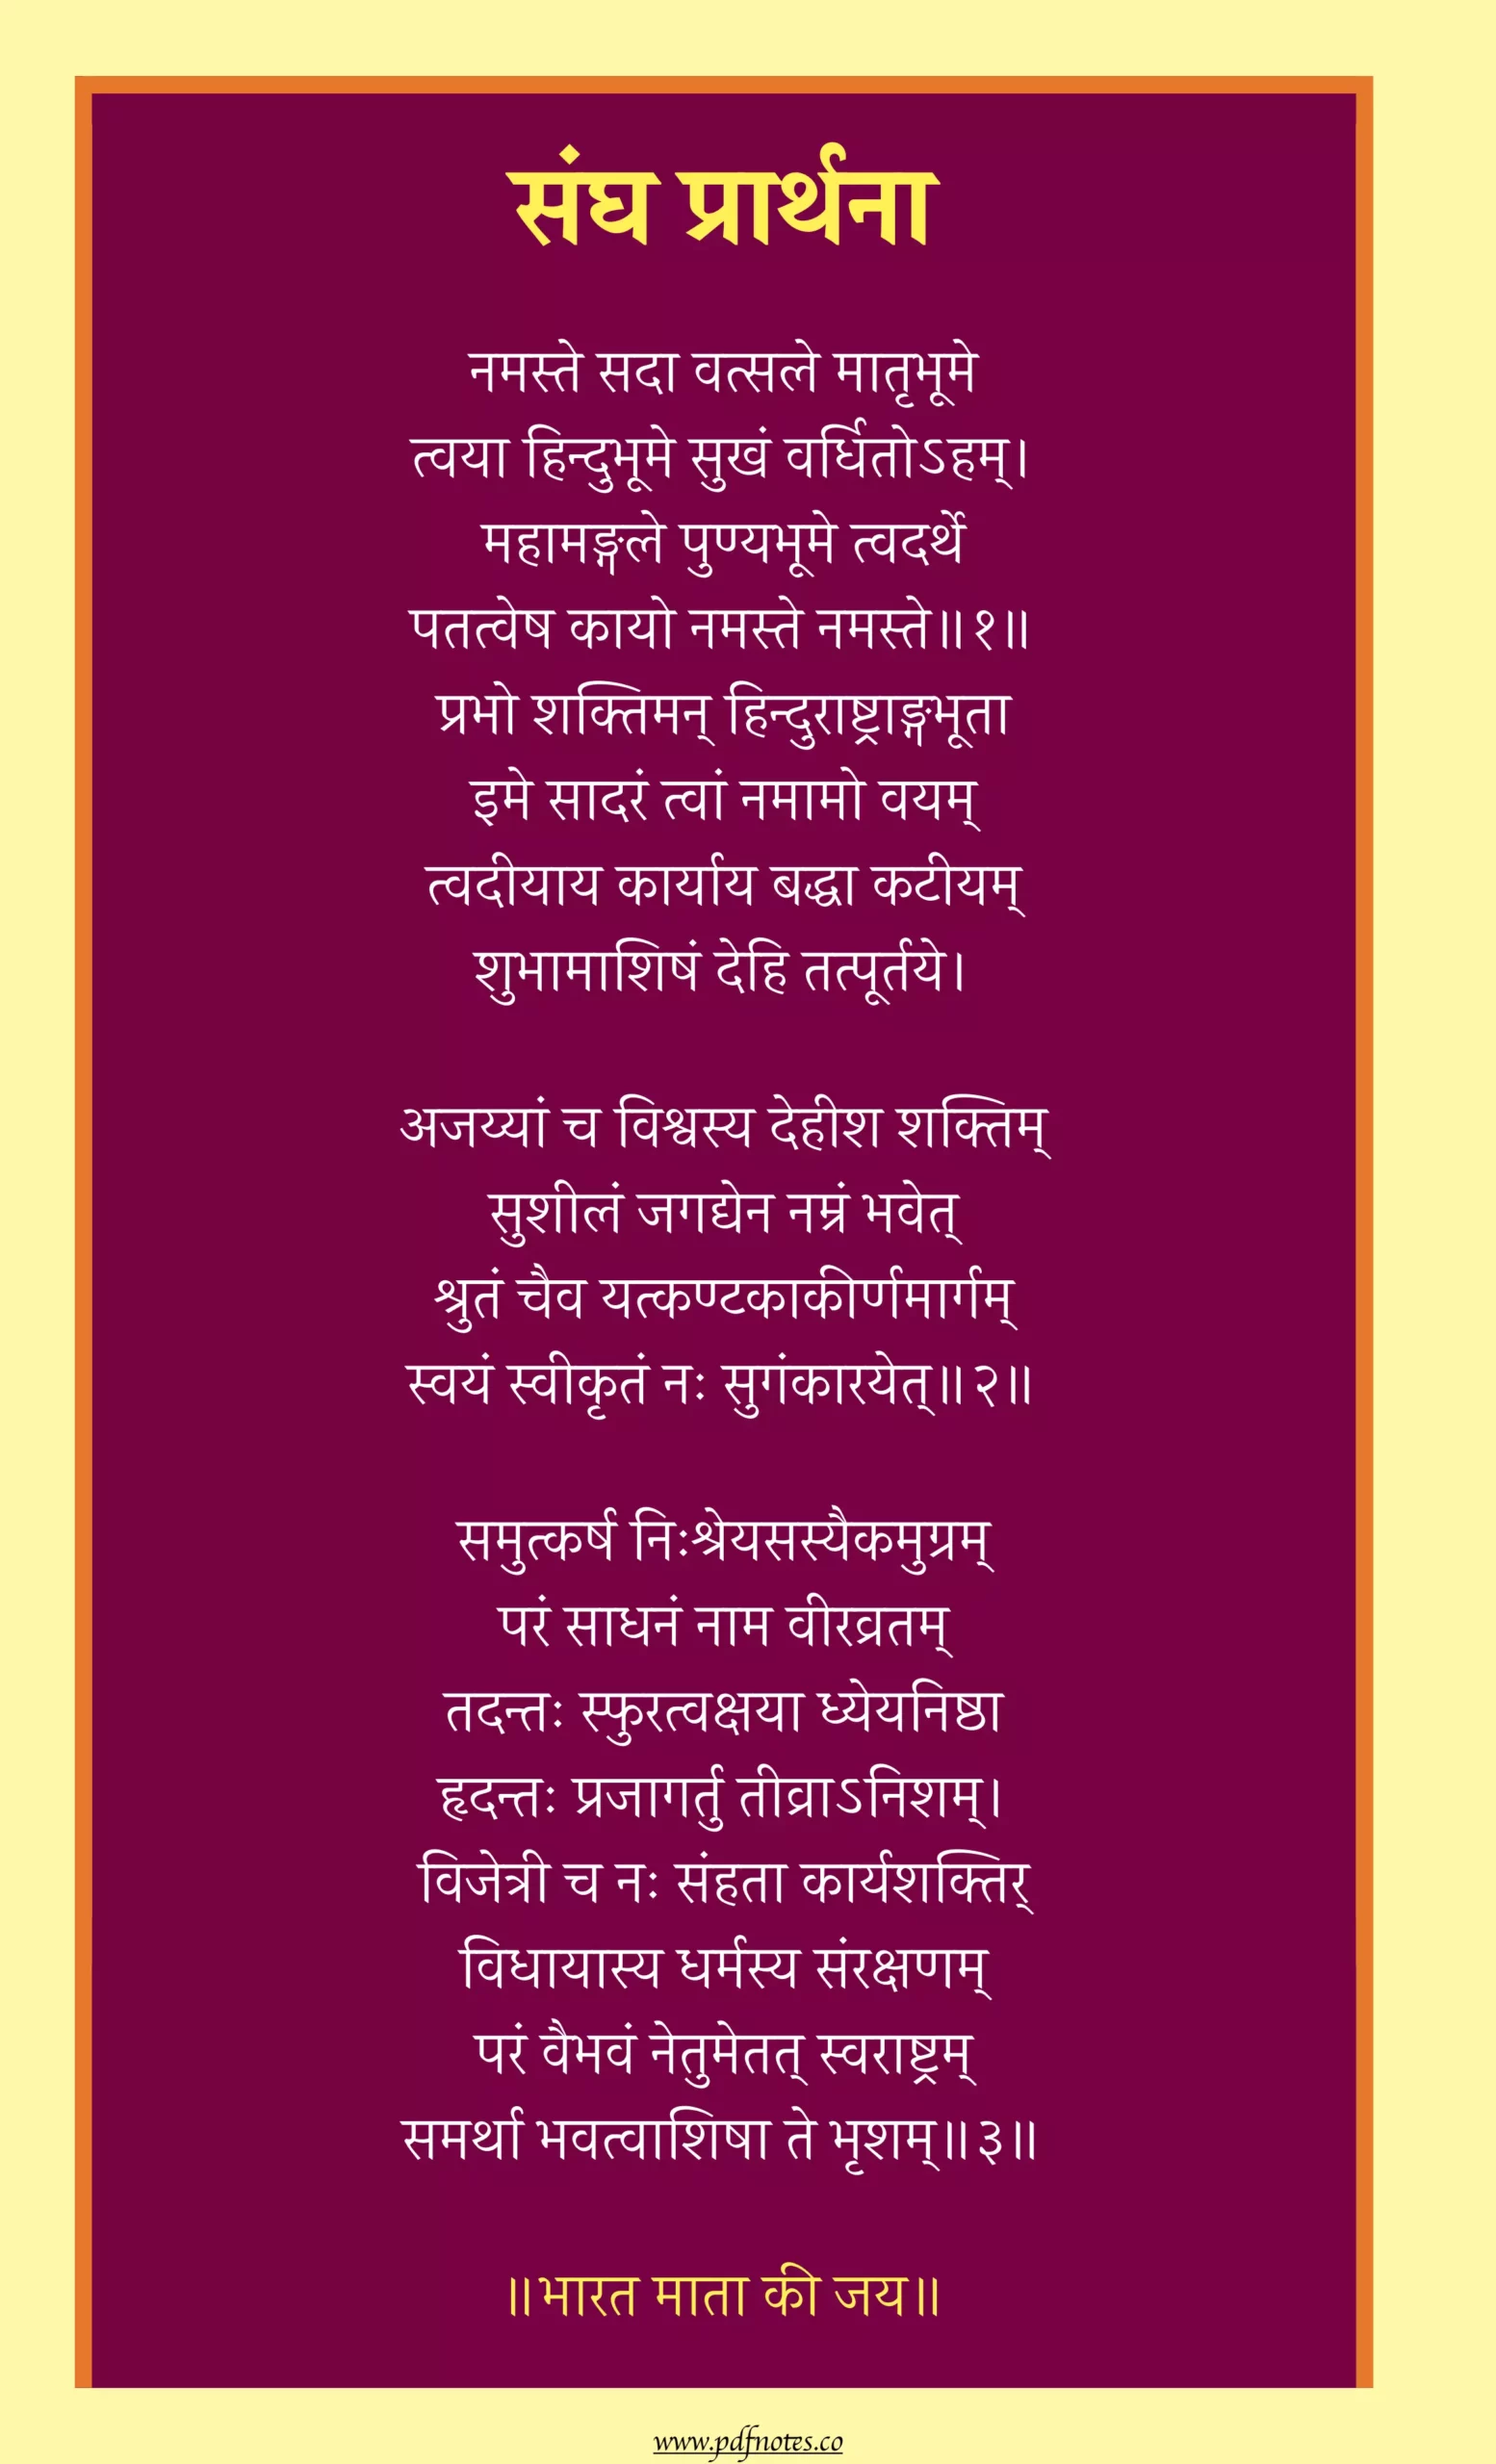 RSS Prarthana PDF Download (संघ प्रार्थना)